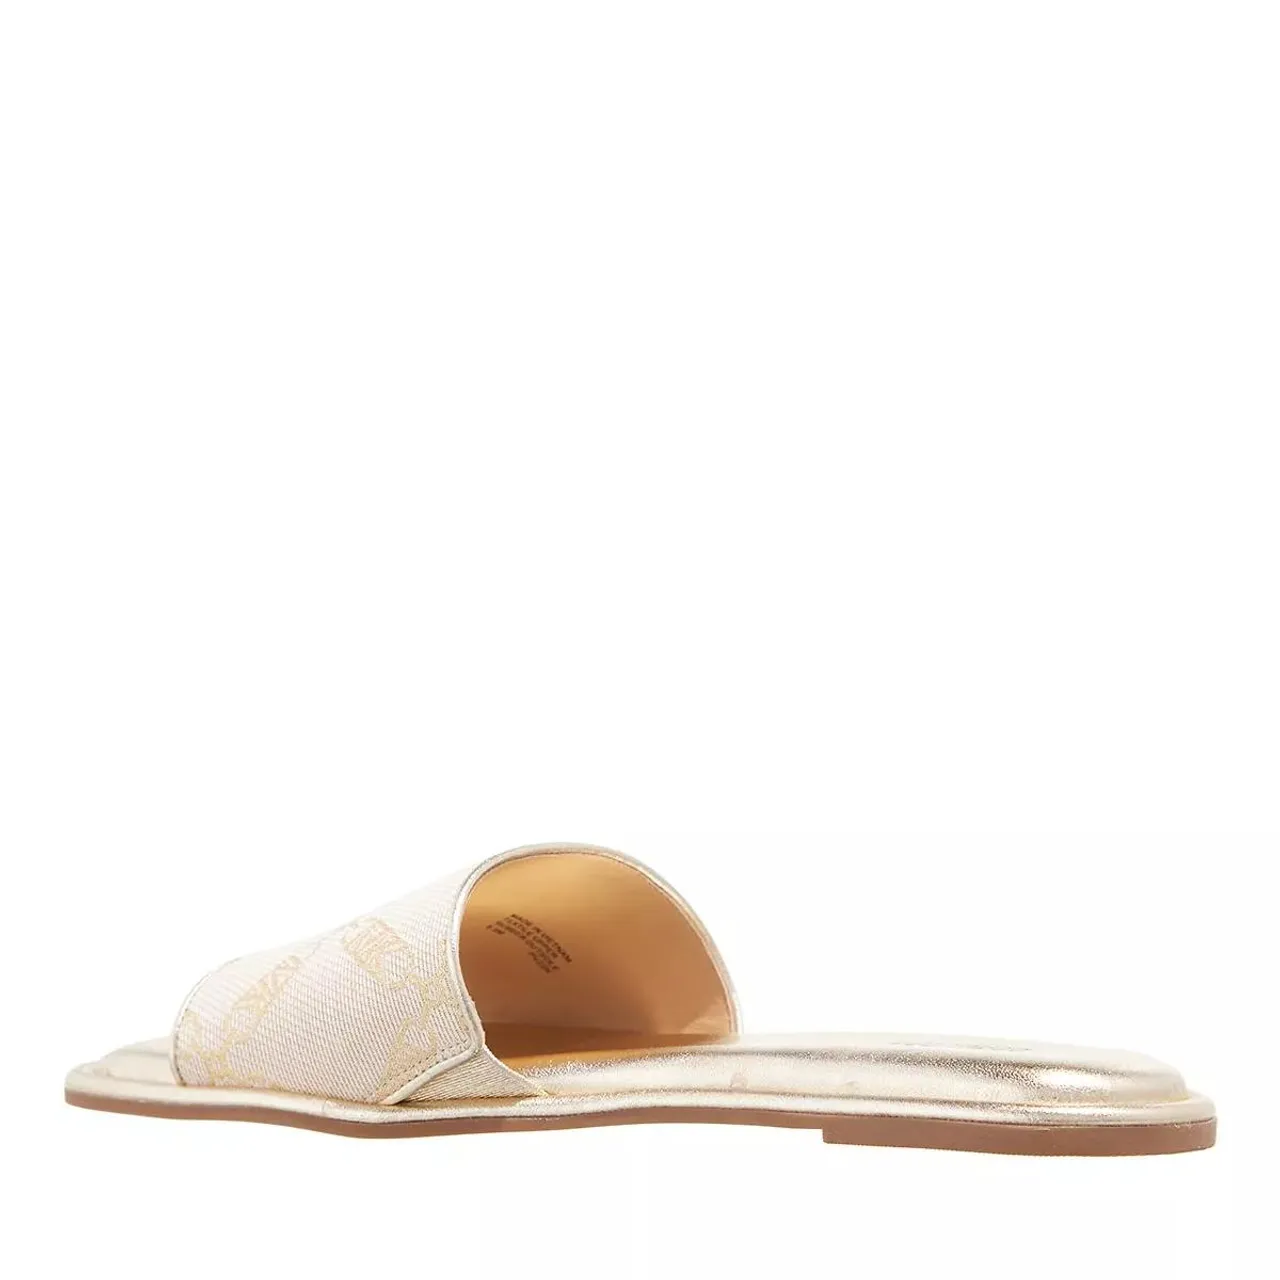 Michael Kors Sandals - Hayworth Slide - beige - Sandals for ladies